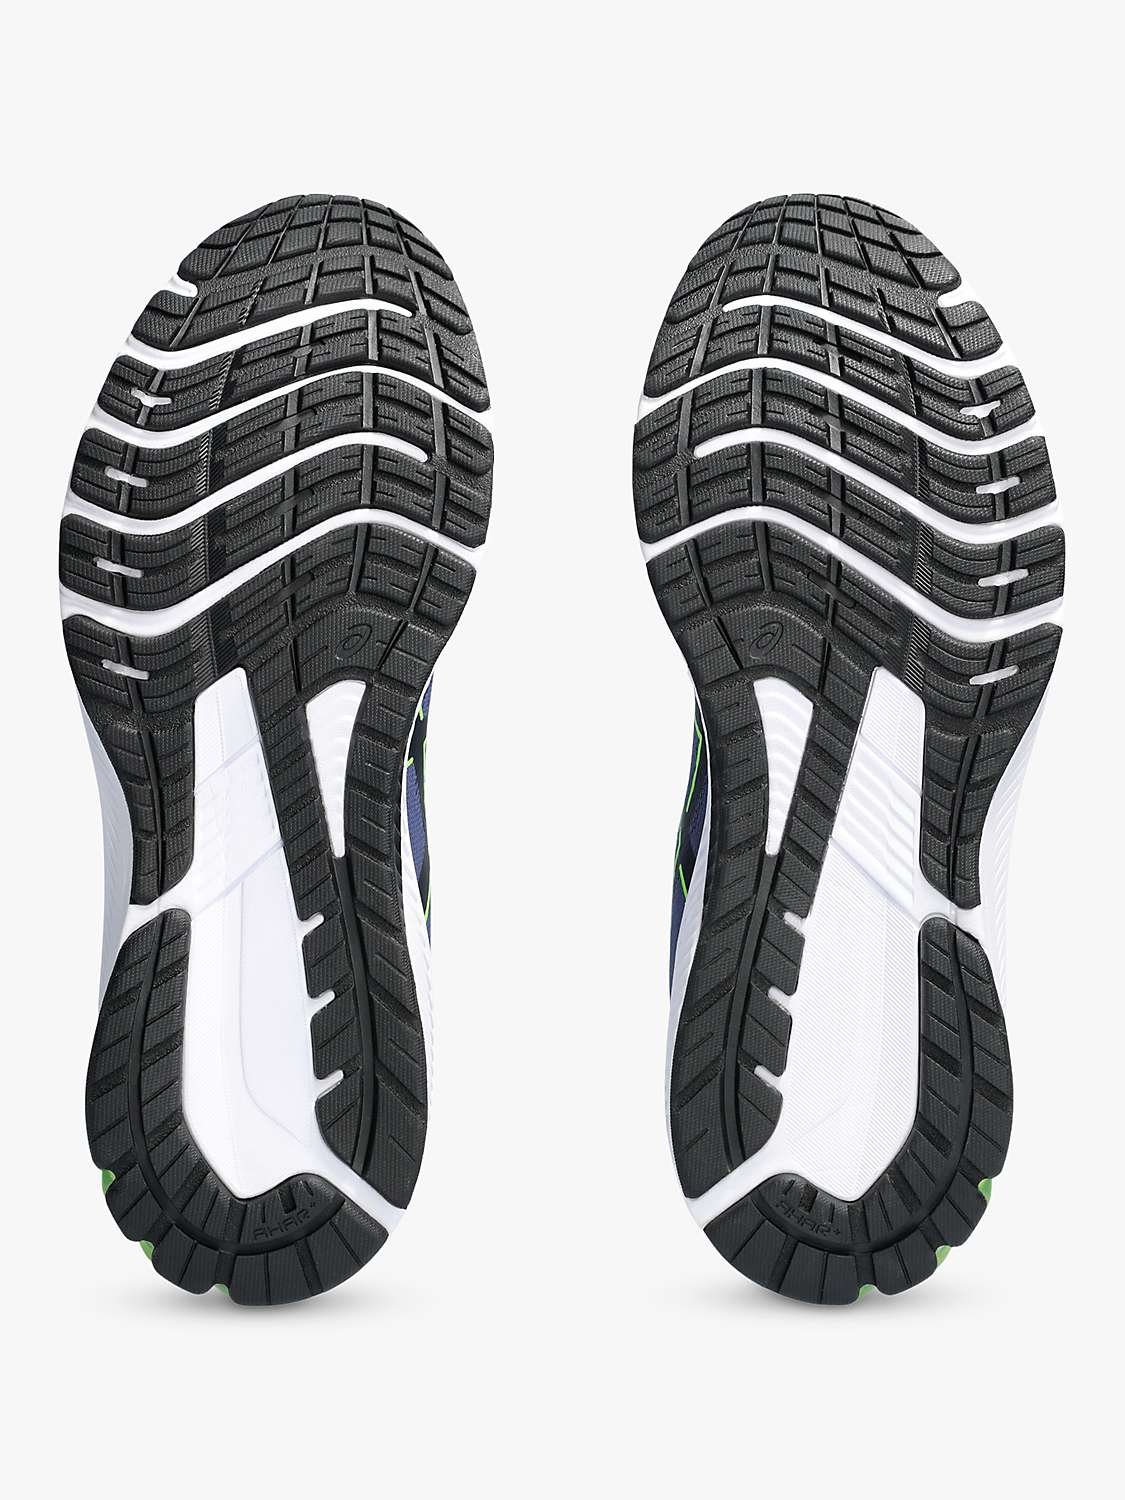 Buy ASICS GT-1000 12 Men's Running Shoes, Blue/Lime Online at johnlewis.com